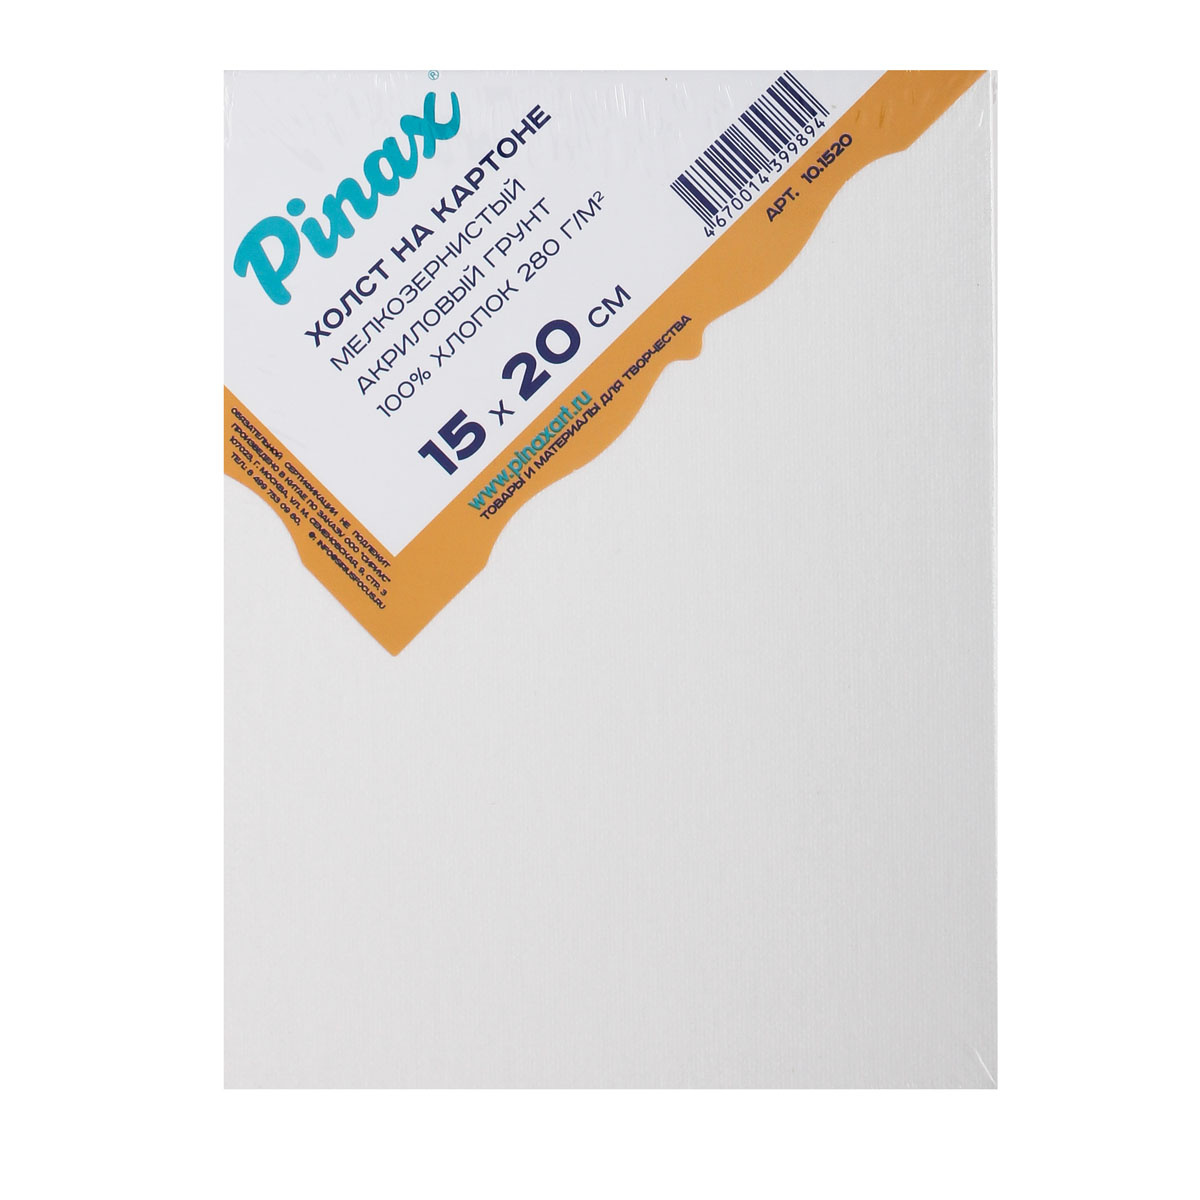 Холст грунтованный на картоне Pinax 280 г 15x20 см холст грунтованный на картоне малевичъ 20x25 см